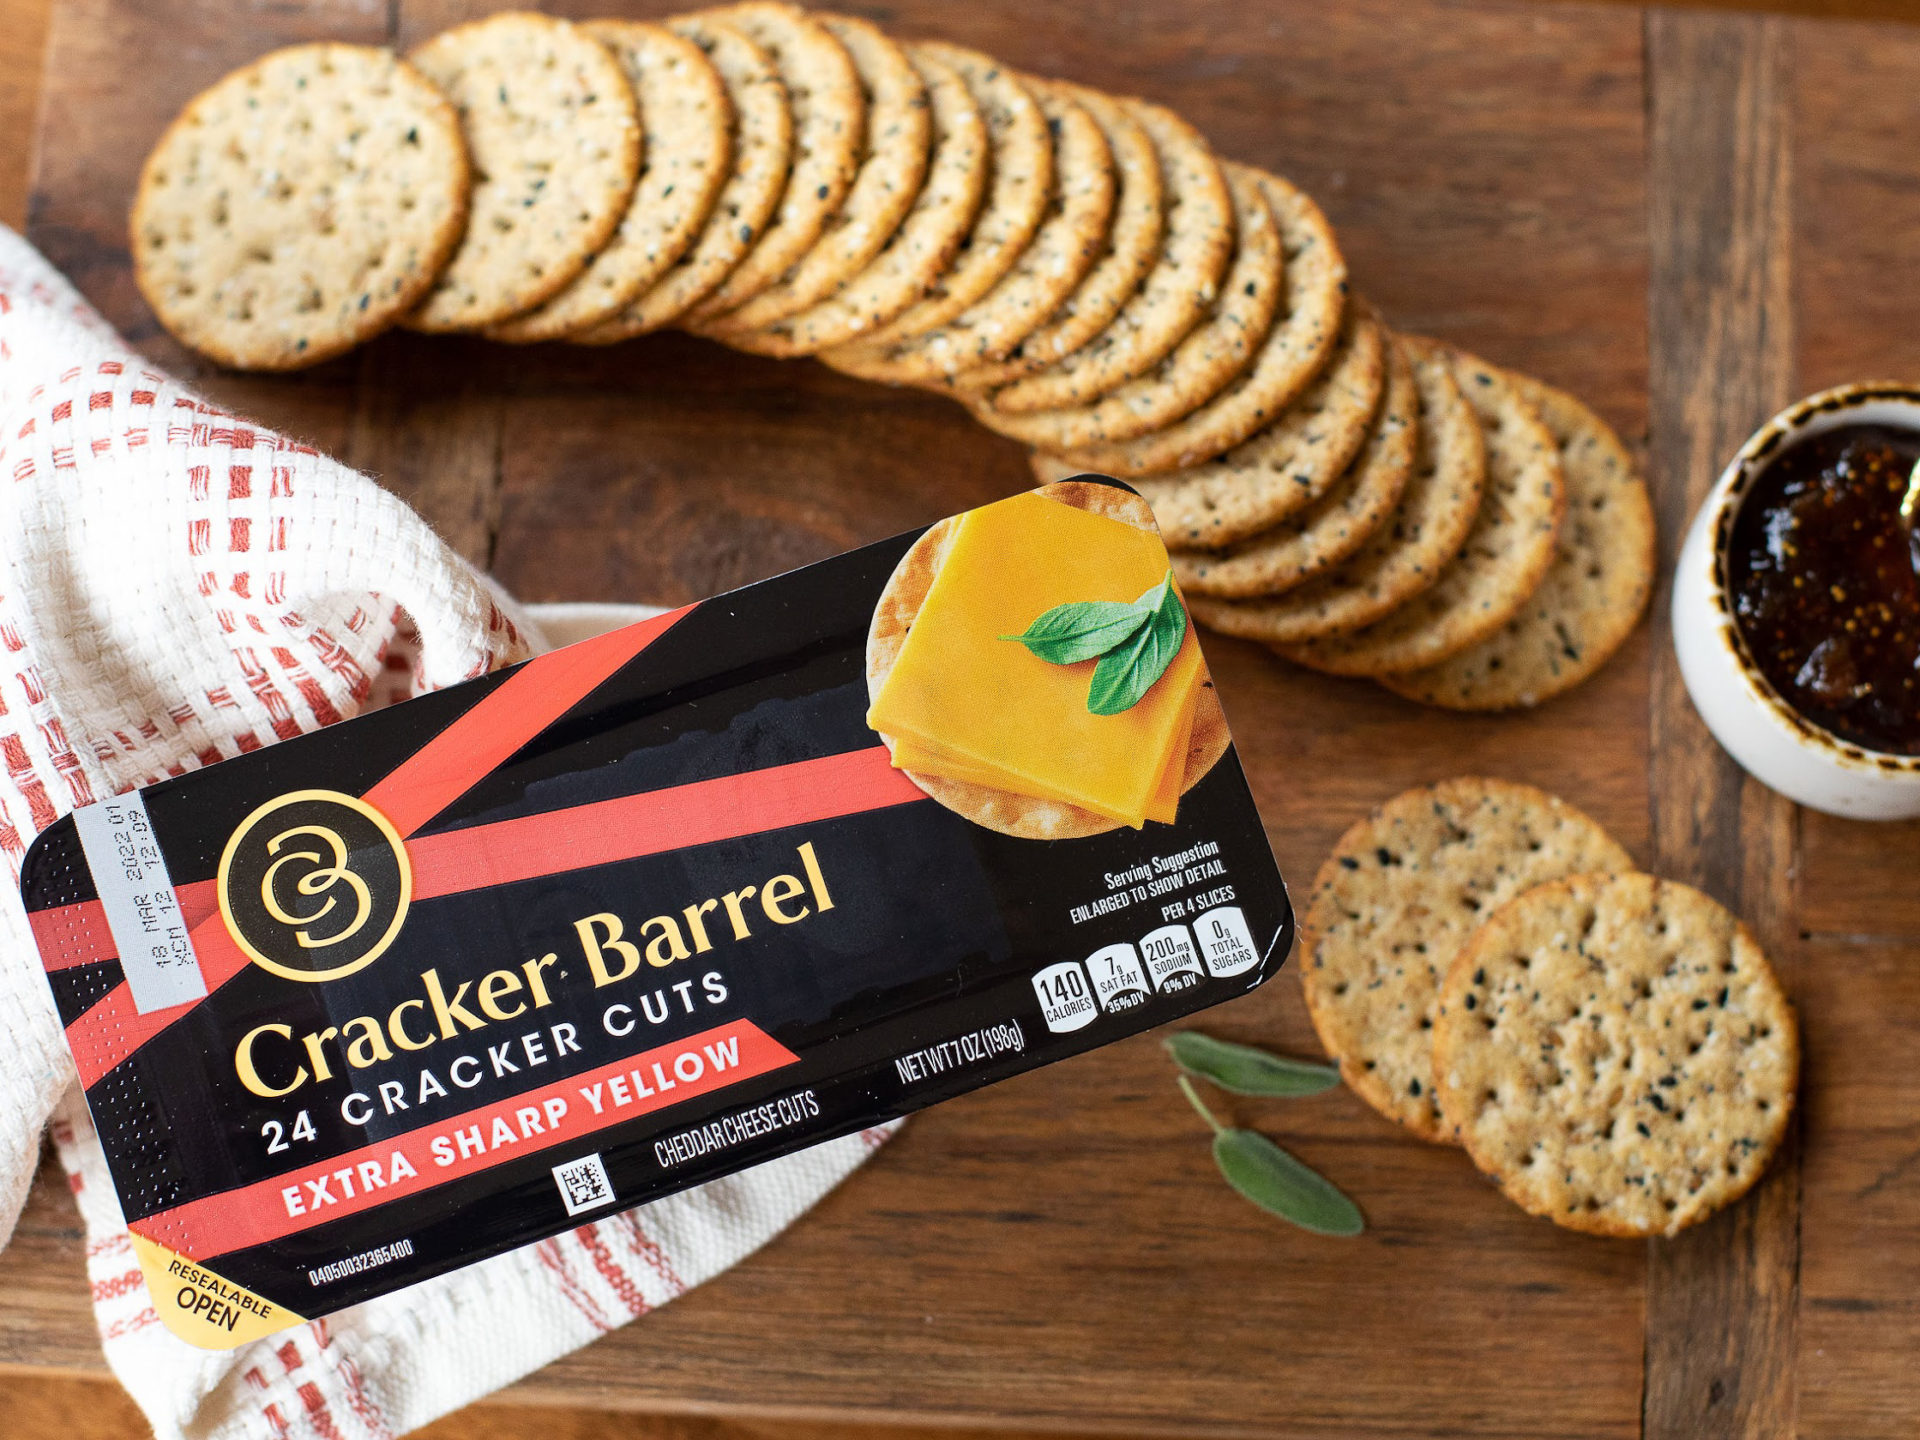 Cracker Barrel Cracker Cuts Just $4.49 At Kroger (Regular Price $6.49)